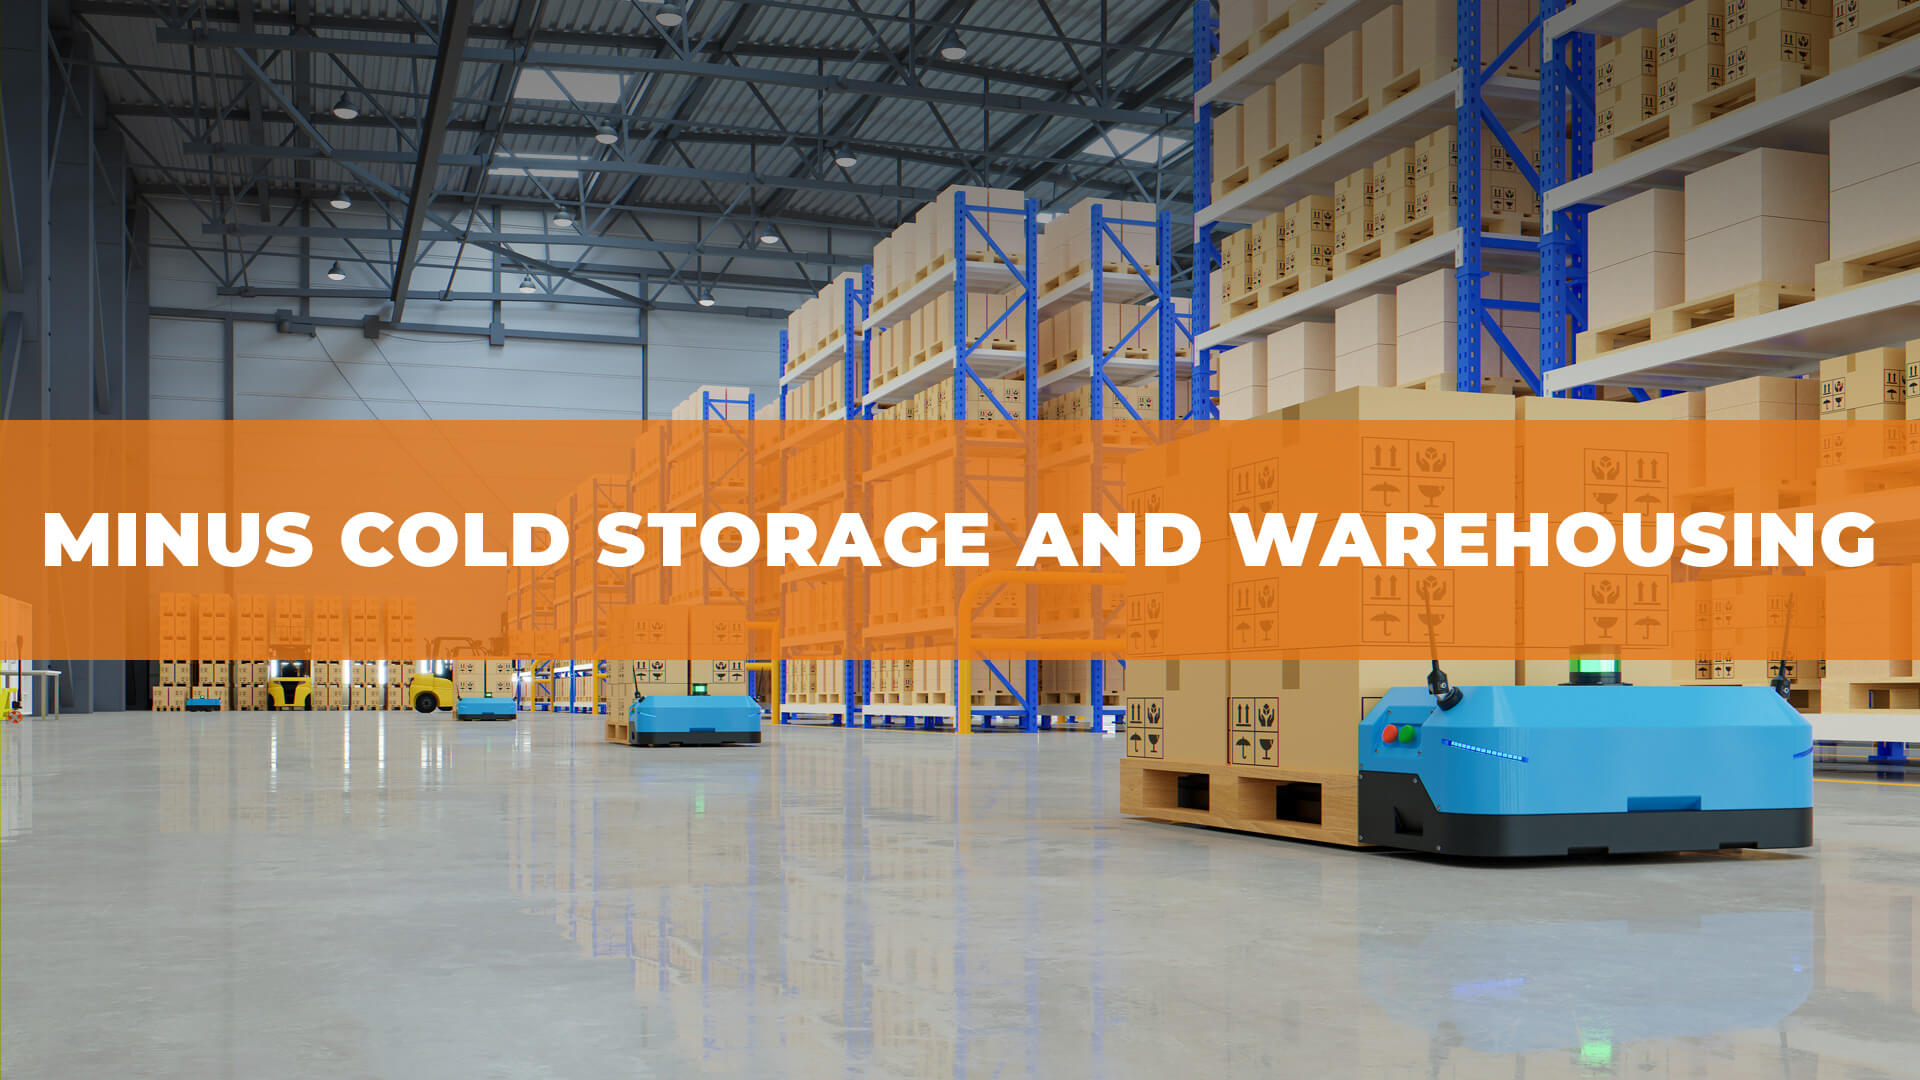 Minus Cold Storage and Warehousing